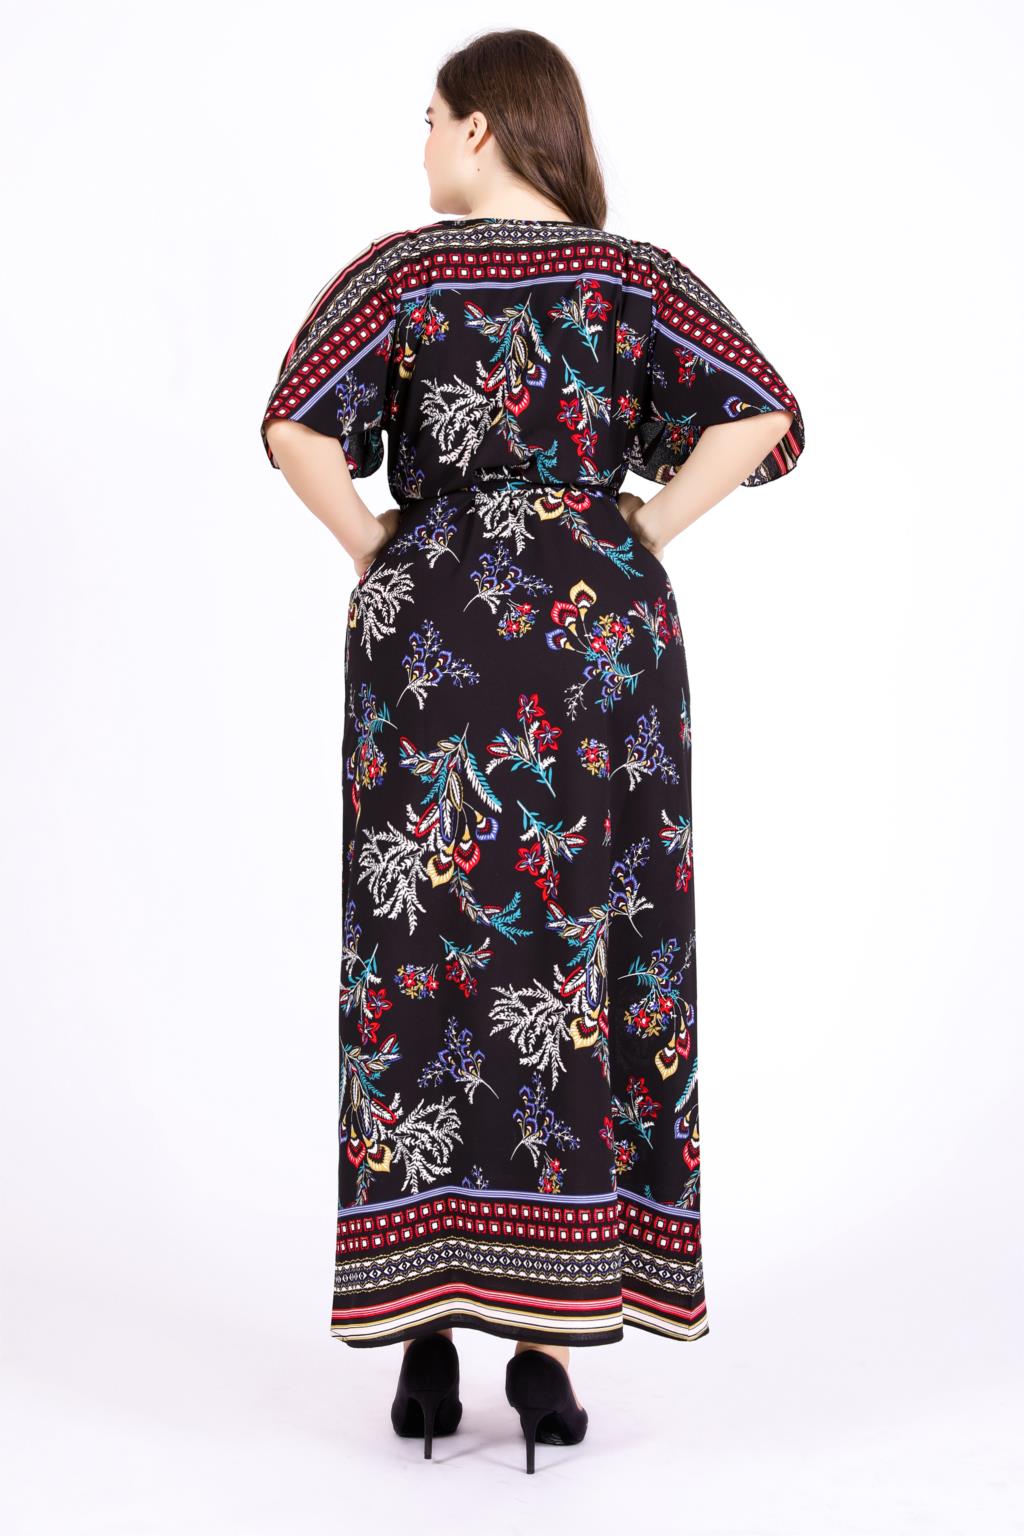 Boho styled V Neck Short Sleeve Retro Floral Print Dress